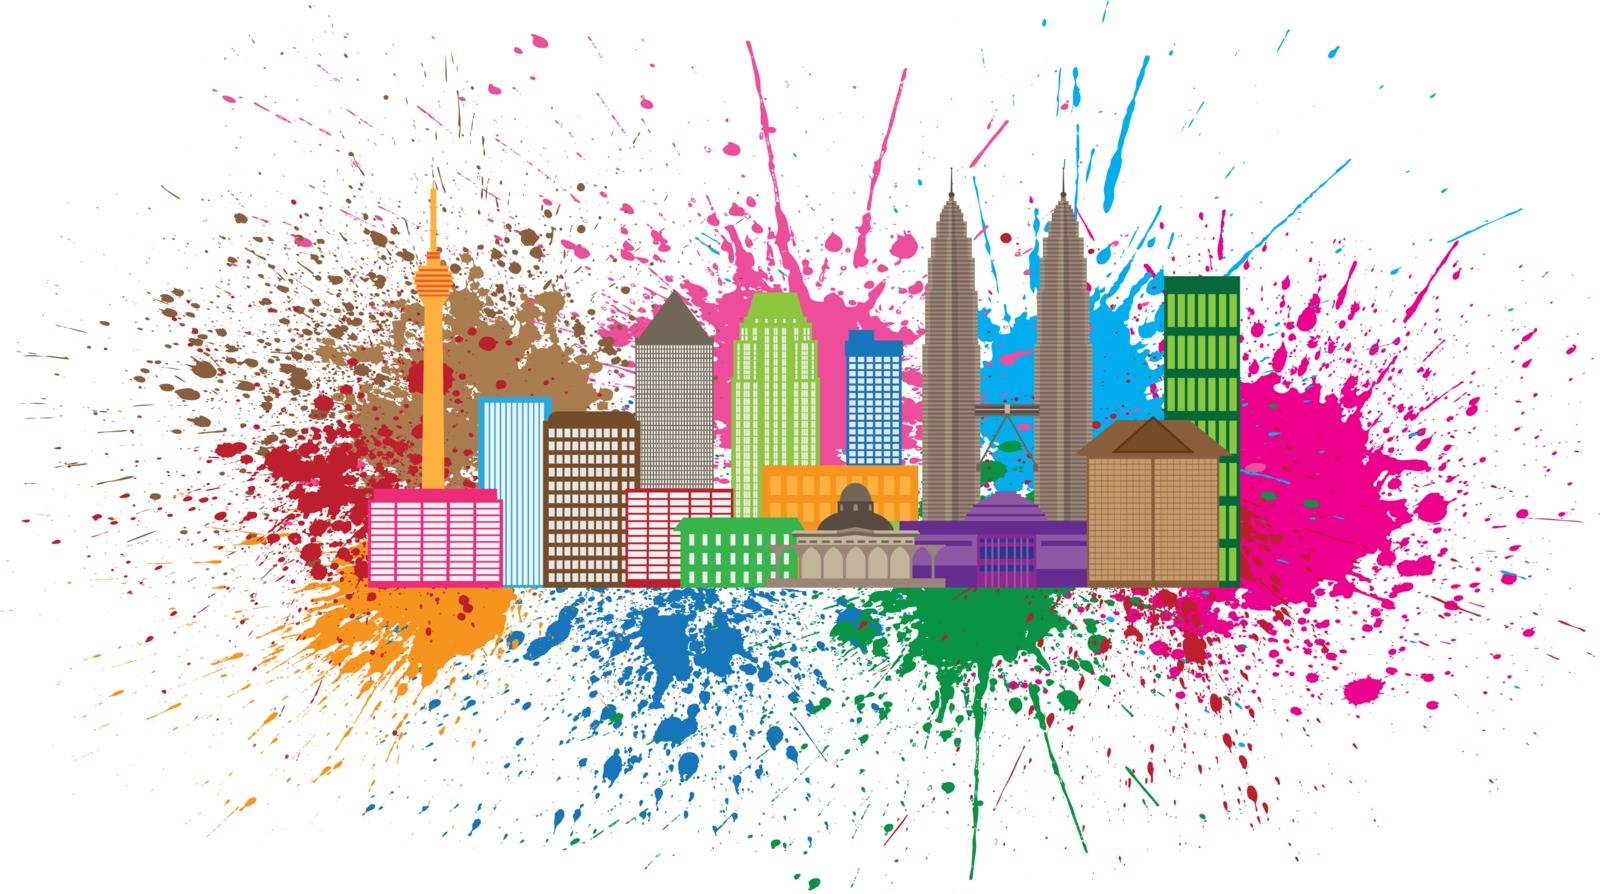 Kuala Lumpur Malaysia City Skyline Color Paint Splash Splatter Isolated on White Background Illustration